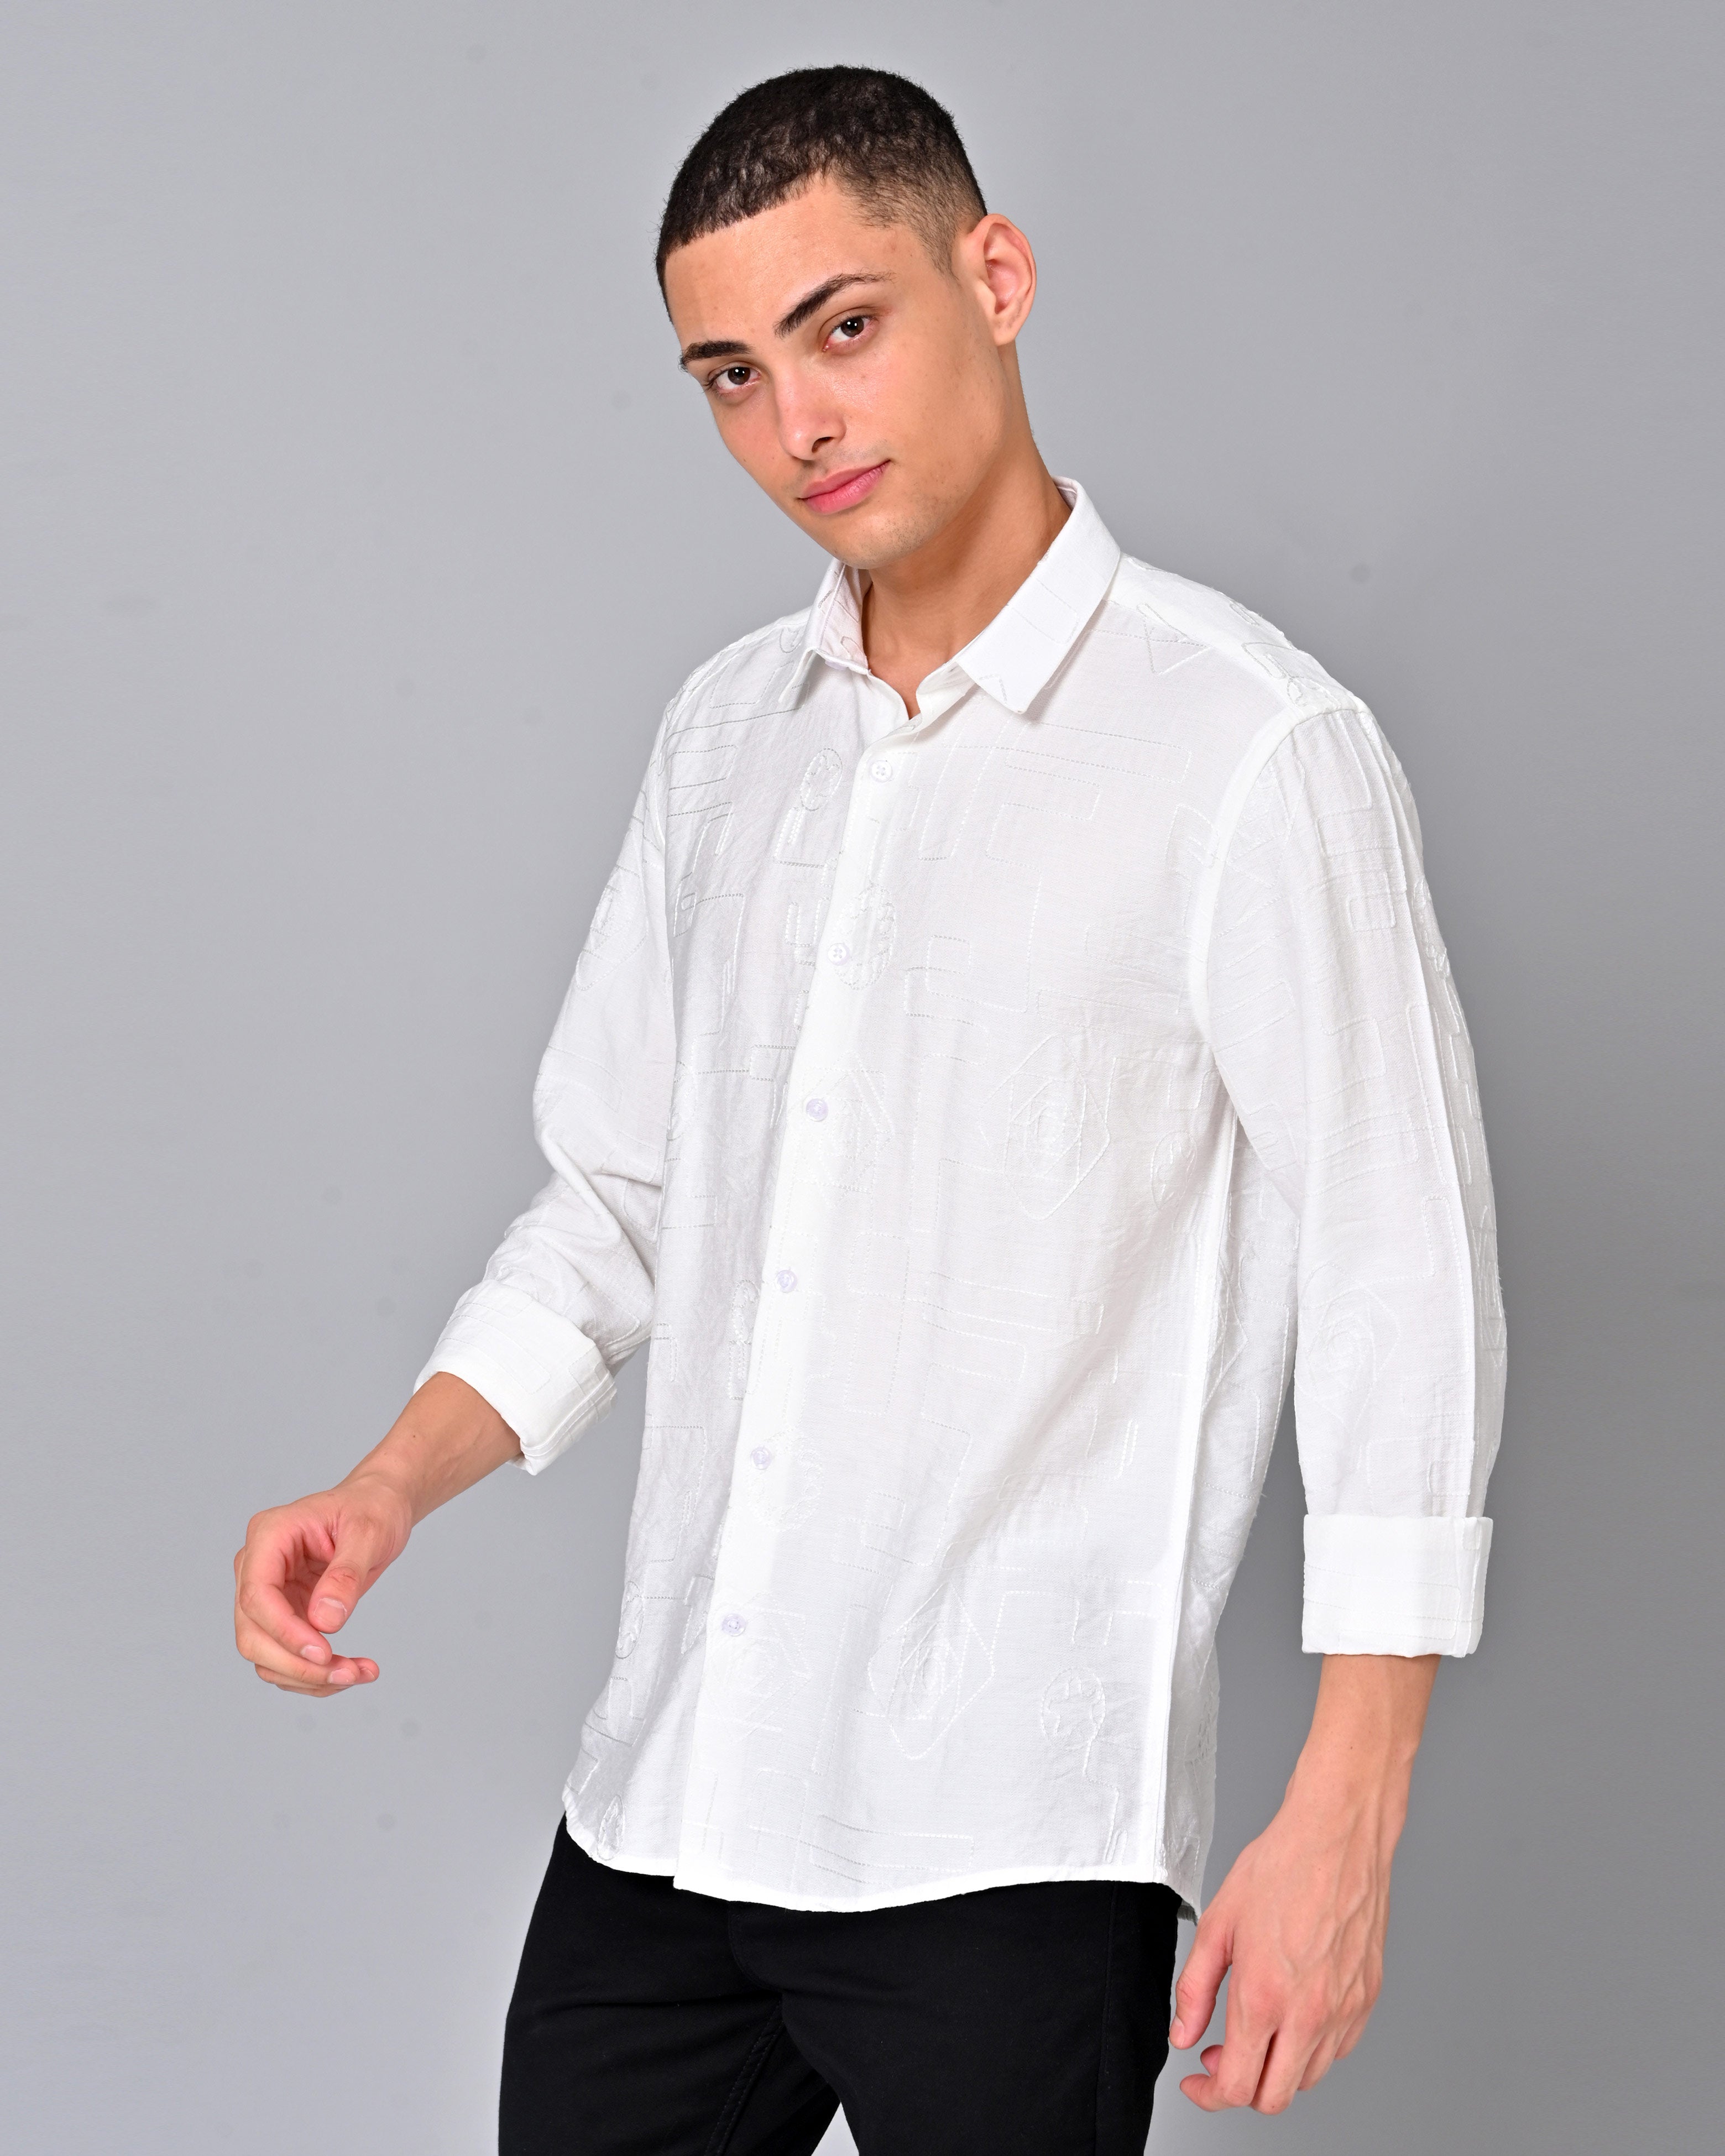 Men's Embroidered Cotton White Shirt